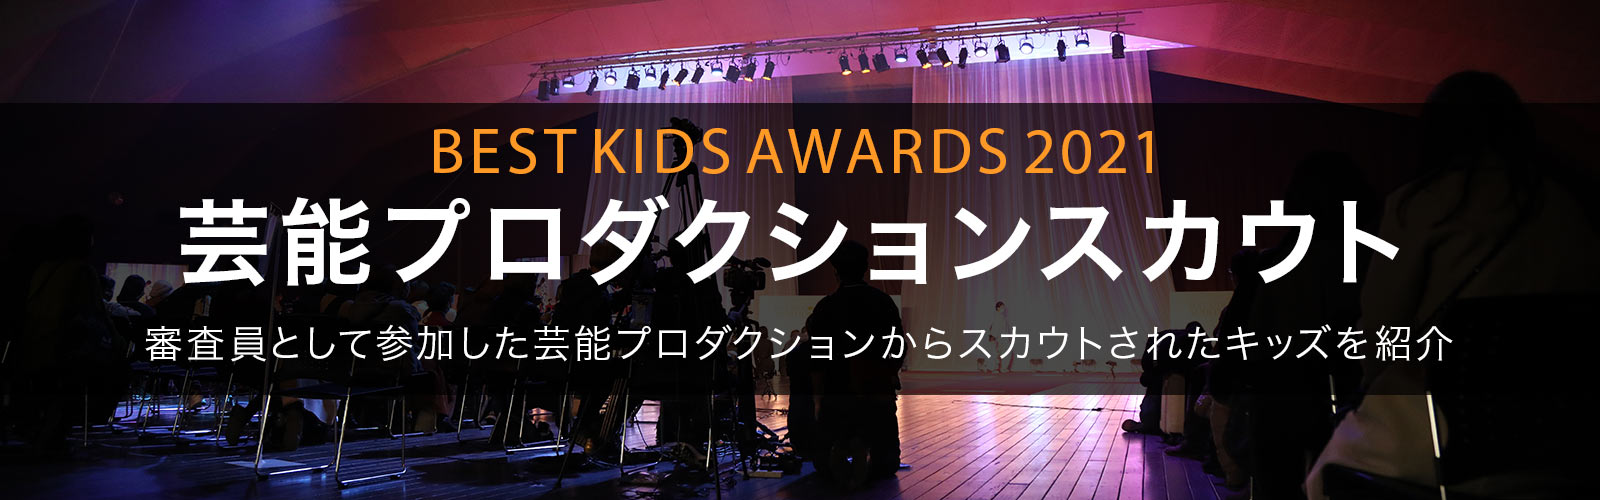 BEST KIDS AWARDS 2021 芸能プロダクションスカウト